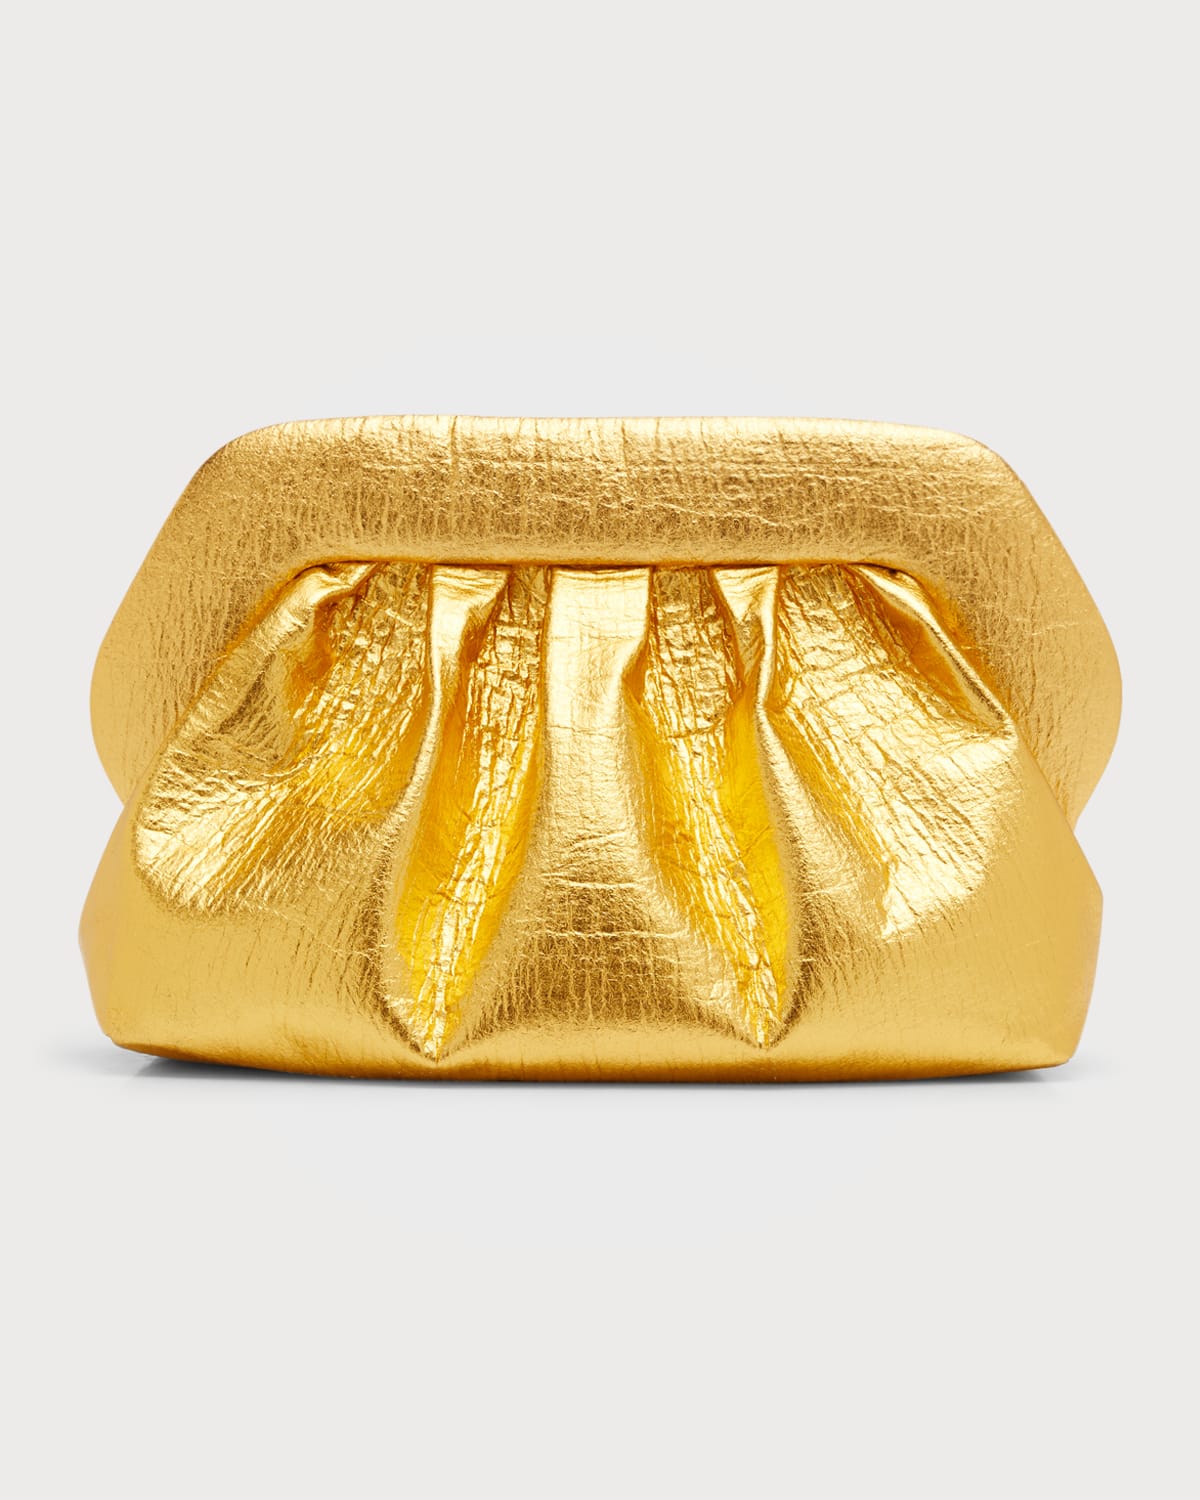 THEMOIRE Bios Knit Laminated Clutch Bag | Neiman Marcus